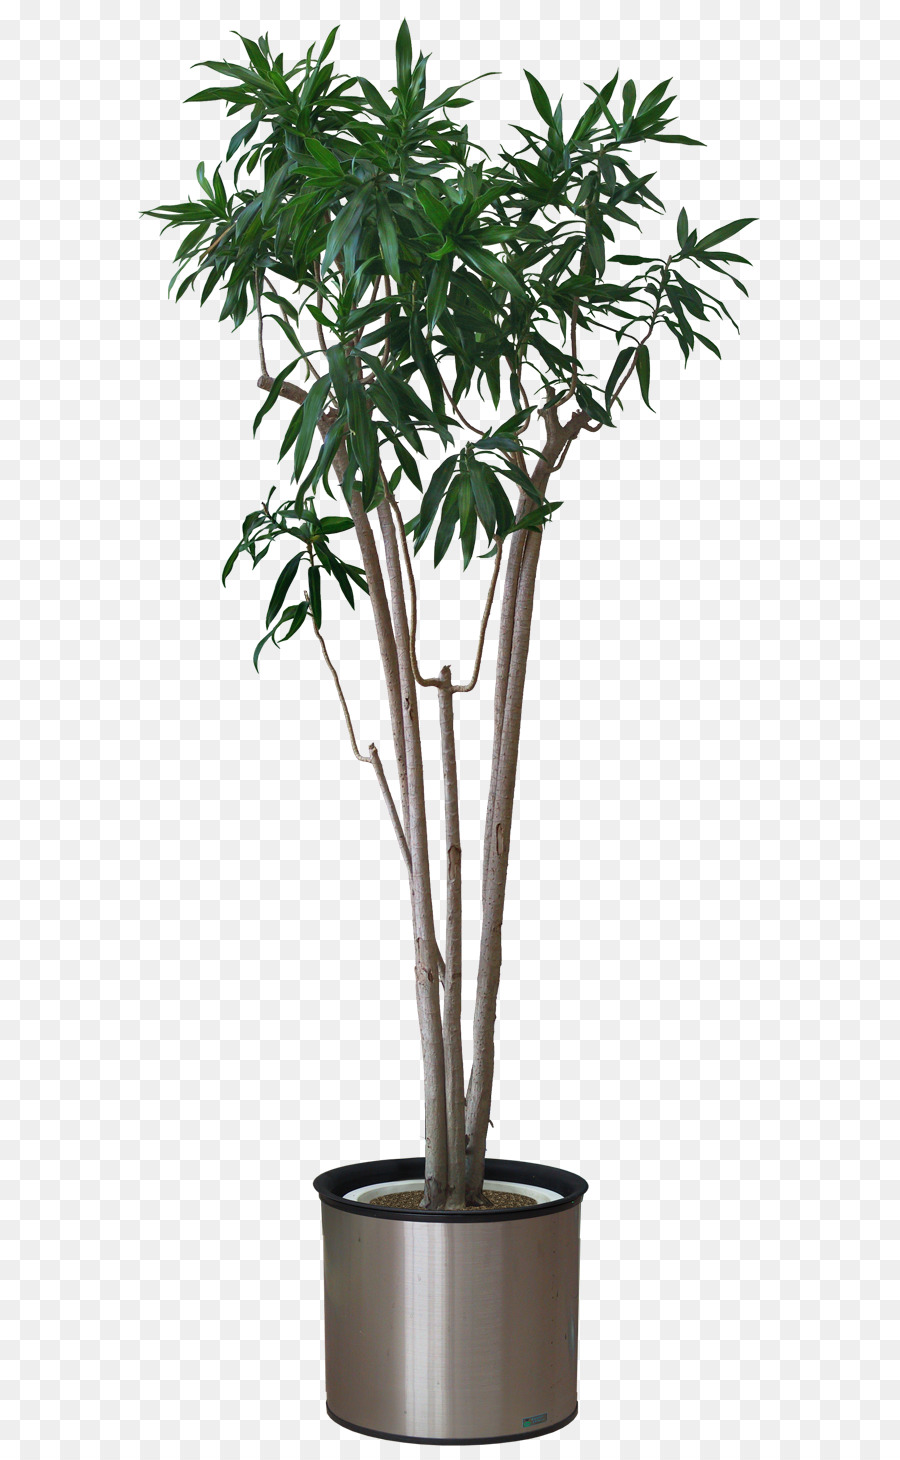 Plant Arecaceae Areca palm Stock photography - flower pot png download ...